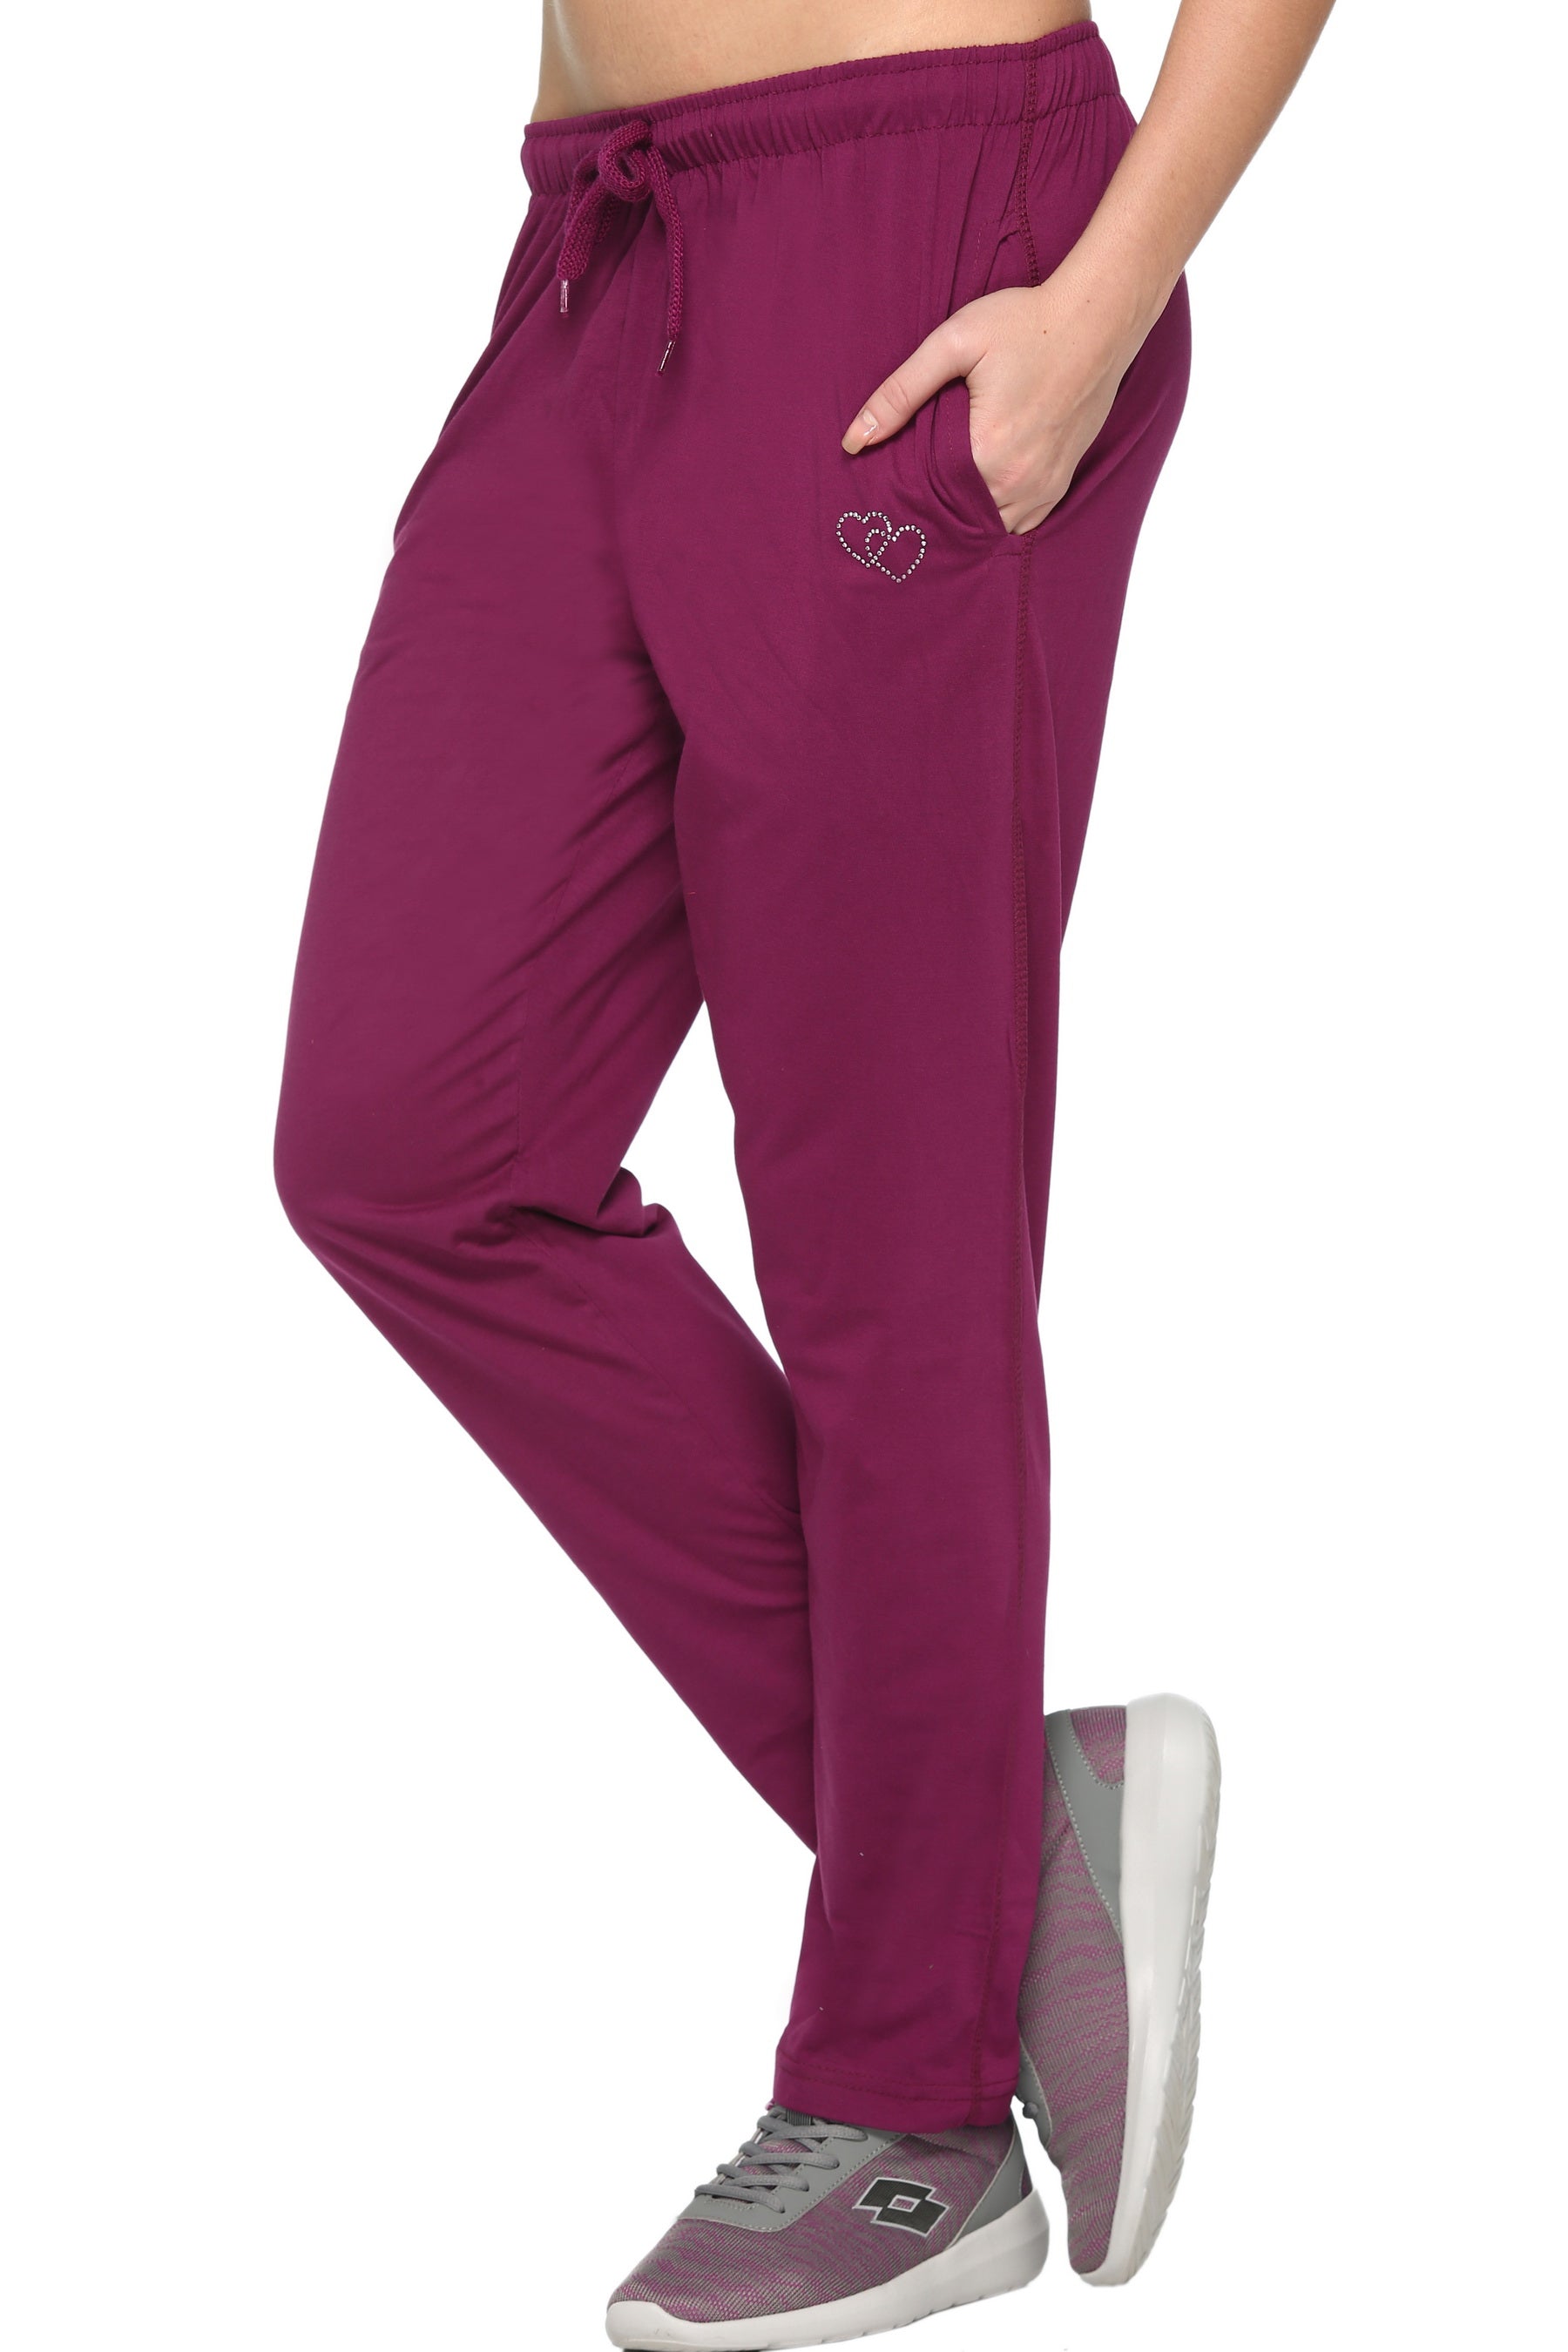 Cotton Ladies Premium Shirt & Pyjama Night Wear, Pants